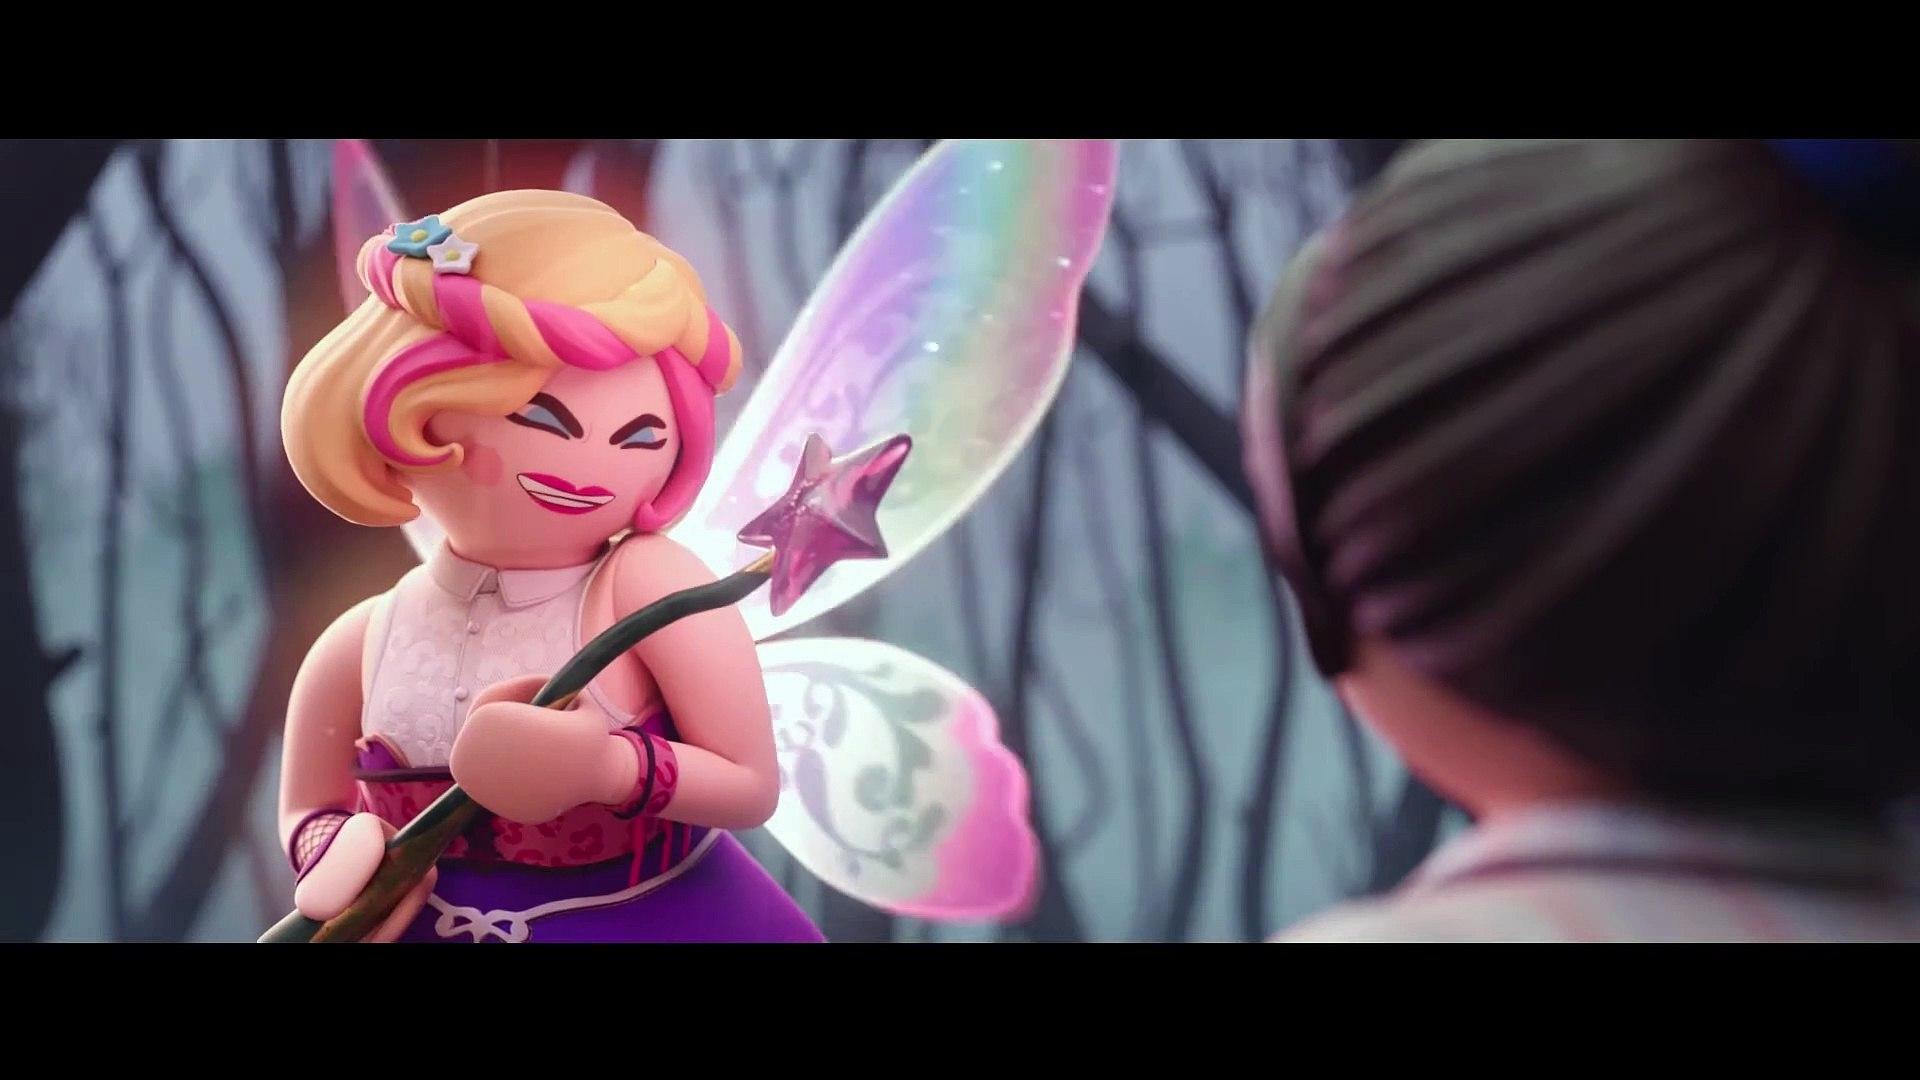 PLAYMOBIL: THE MOVIE Trainor transforms into the Fairy Godmother